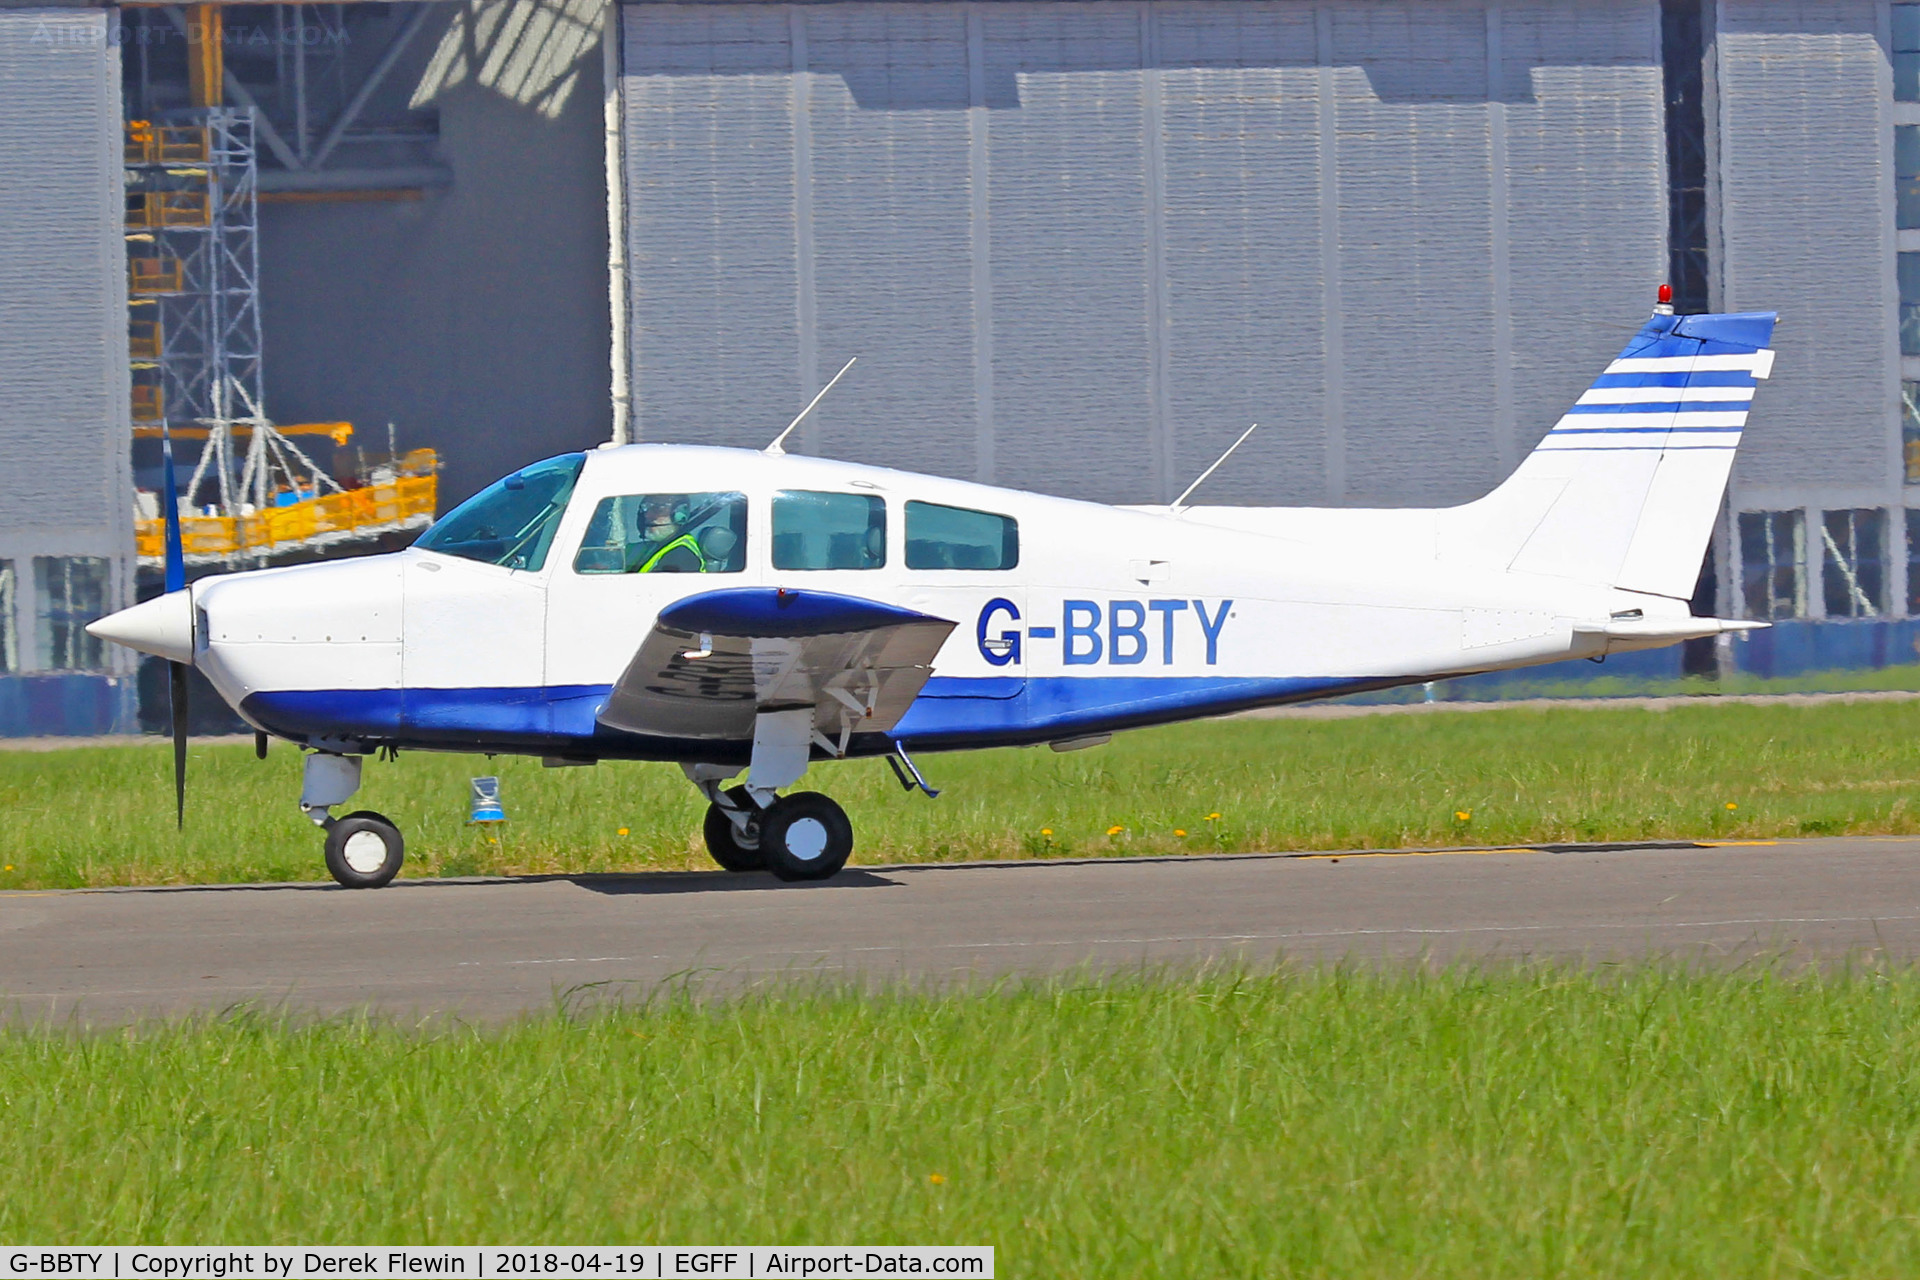 G-BBTY, 1974 Beech C23 Sundowner 180 Sundowner 180 C/N M-1525, SUNDOWNER 180, seen shortly after landing on runway 30.